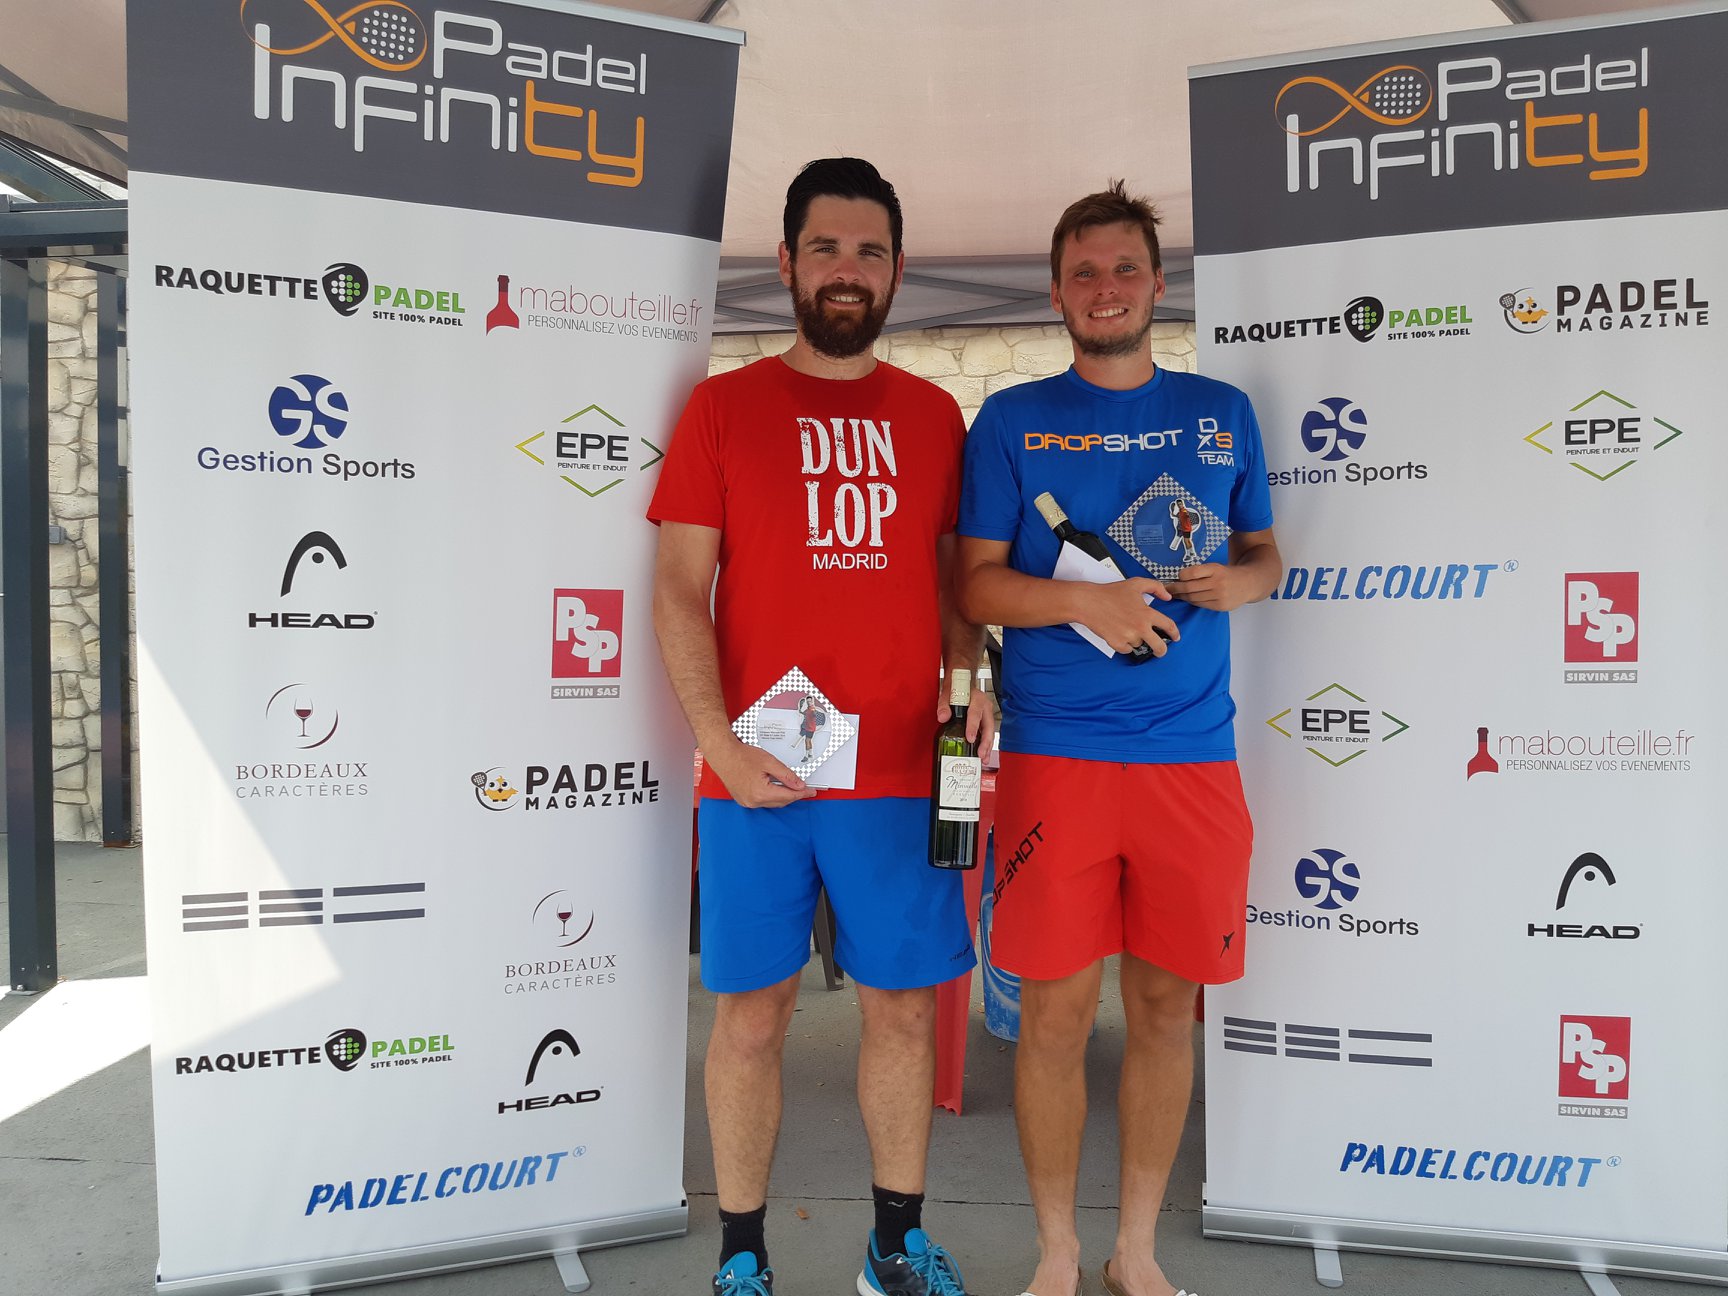 Padel Infinity – Cordero / Pes remporte l’ultime étape WINWIN Padel des Hauts de Nîmes